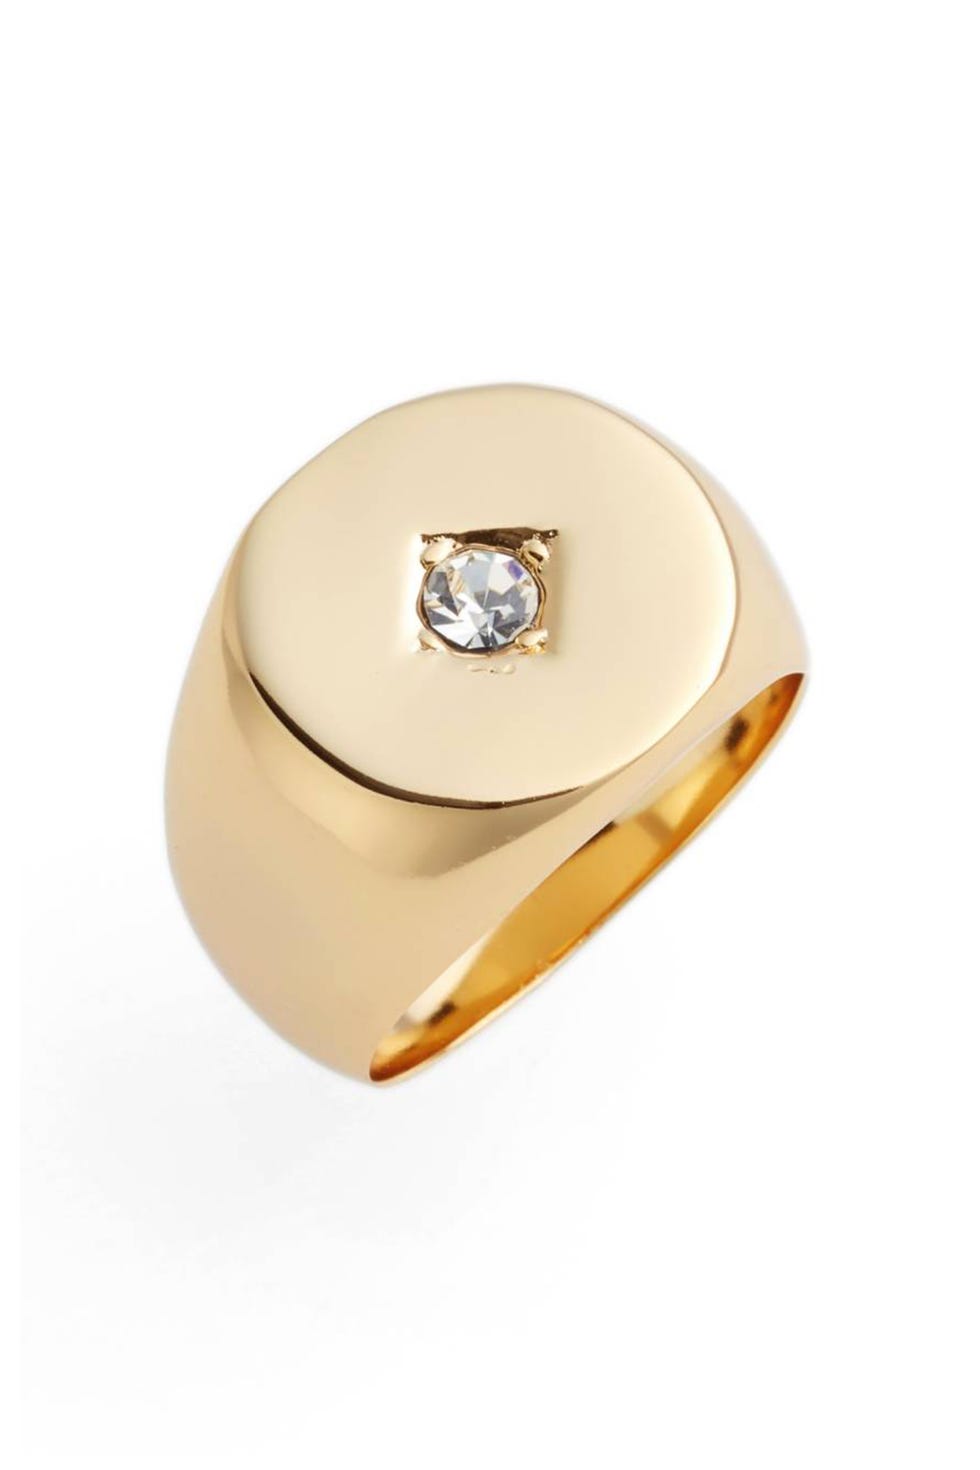 Ring, Jewellery, Fashion accessory, Diamond, Gemstone, Engagement ring, Metal, Platinum, Wedding ring, Gold, 